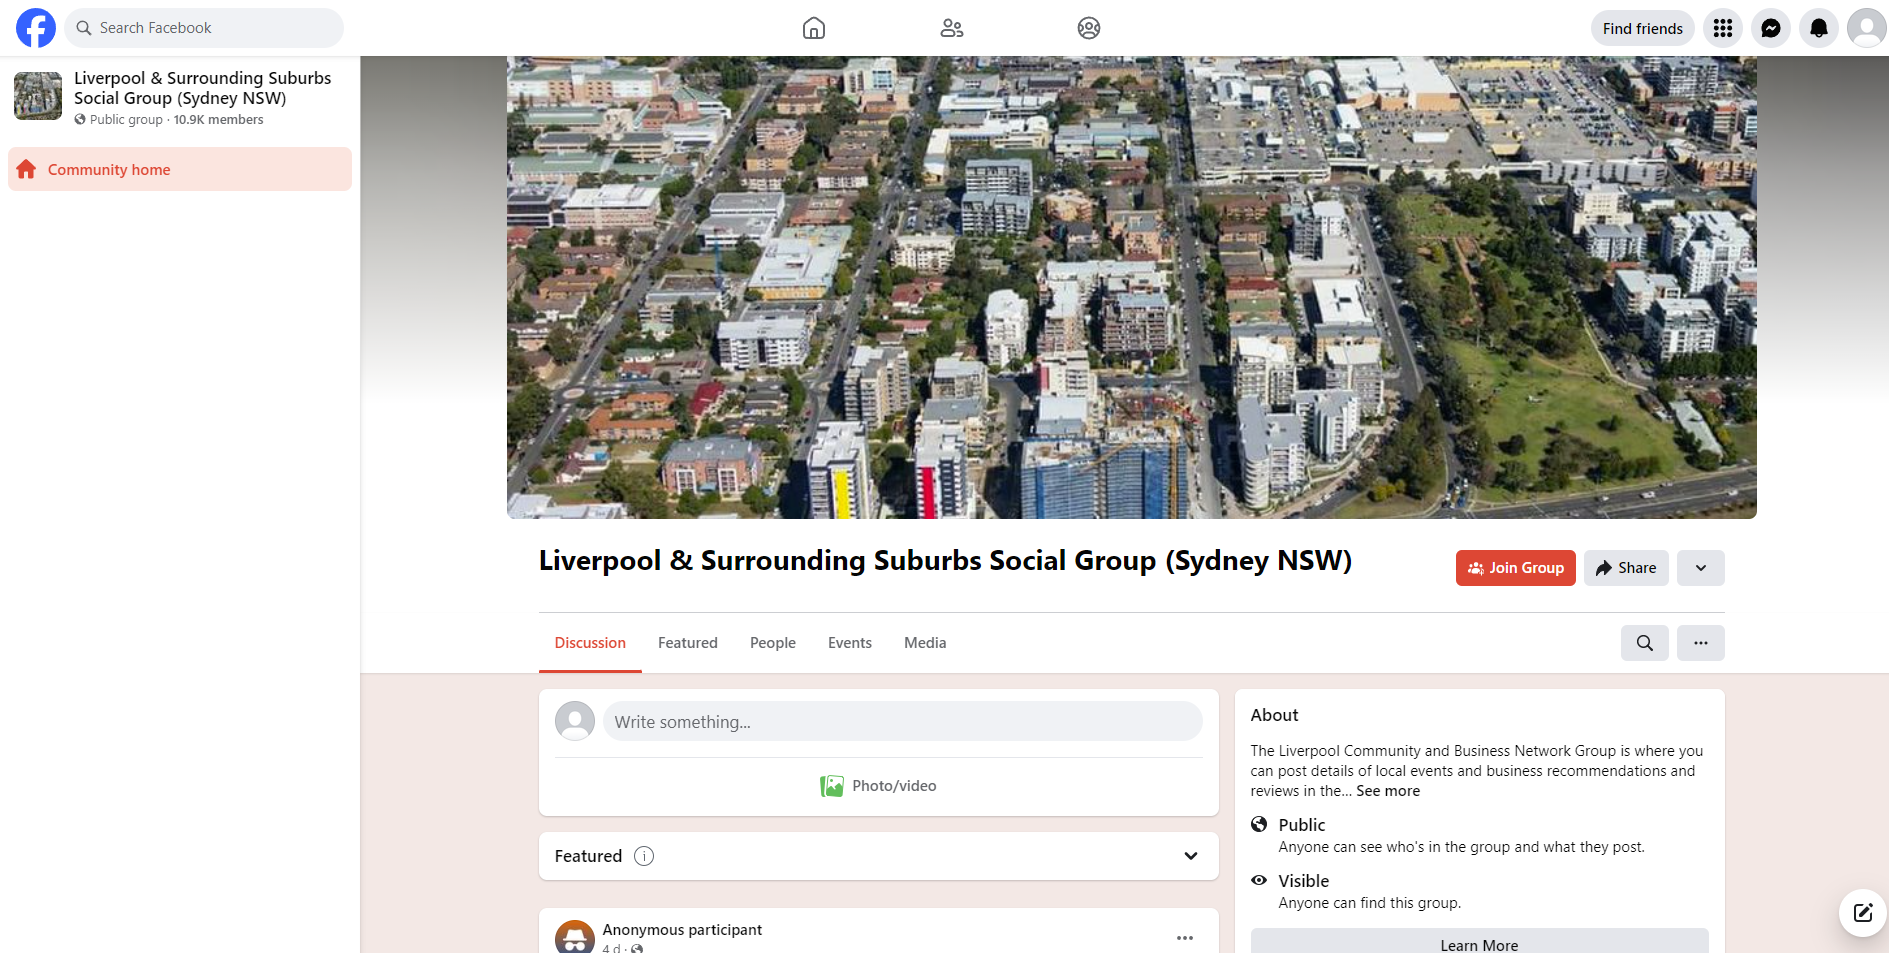 Liverpool & Surrounding Suburbs Social Group (Sydney NSW)